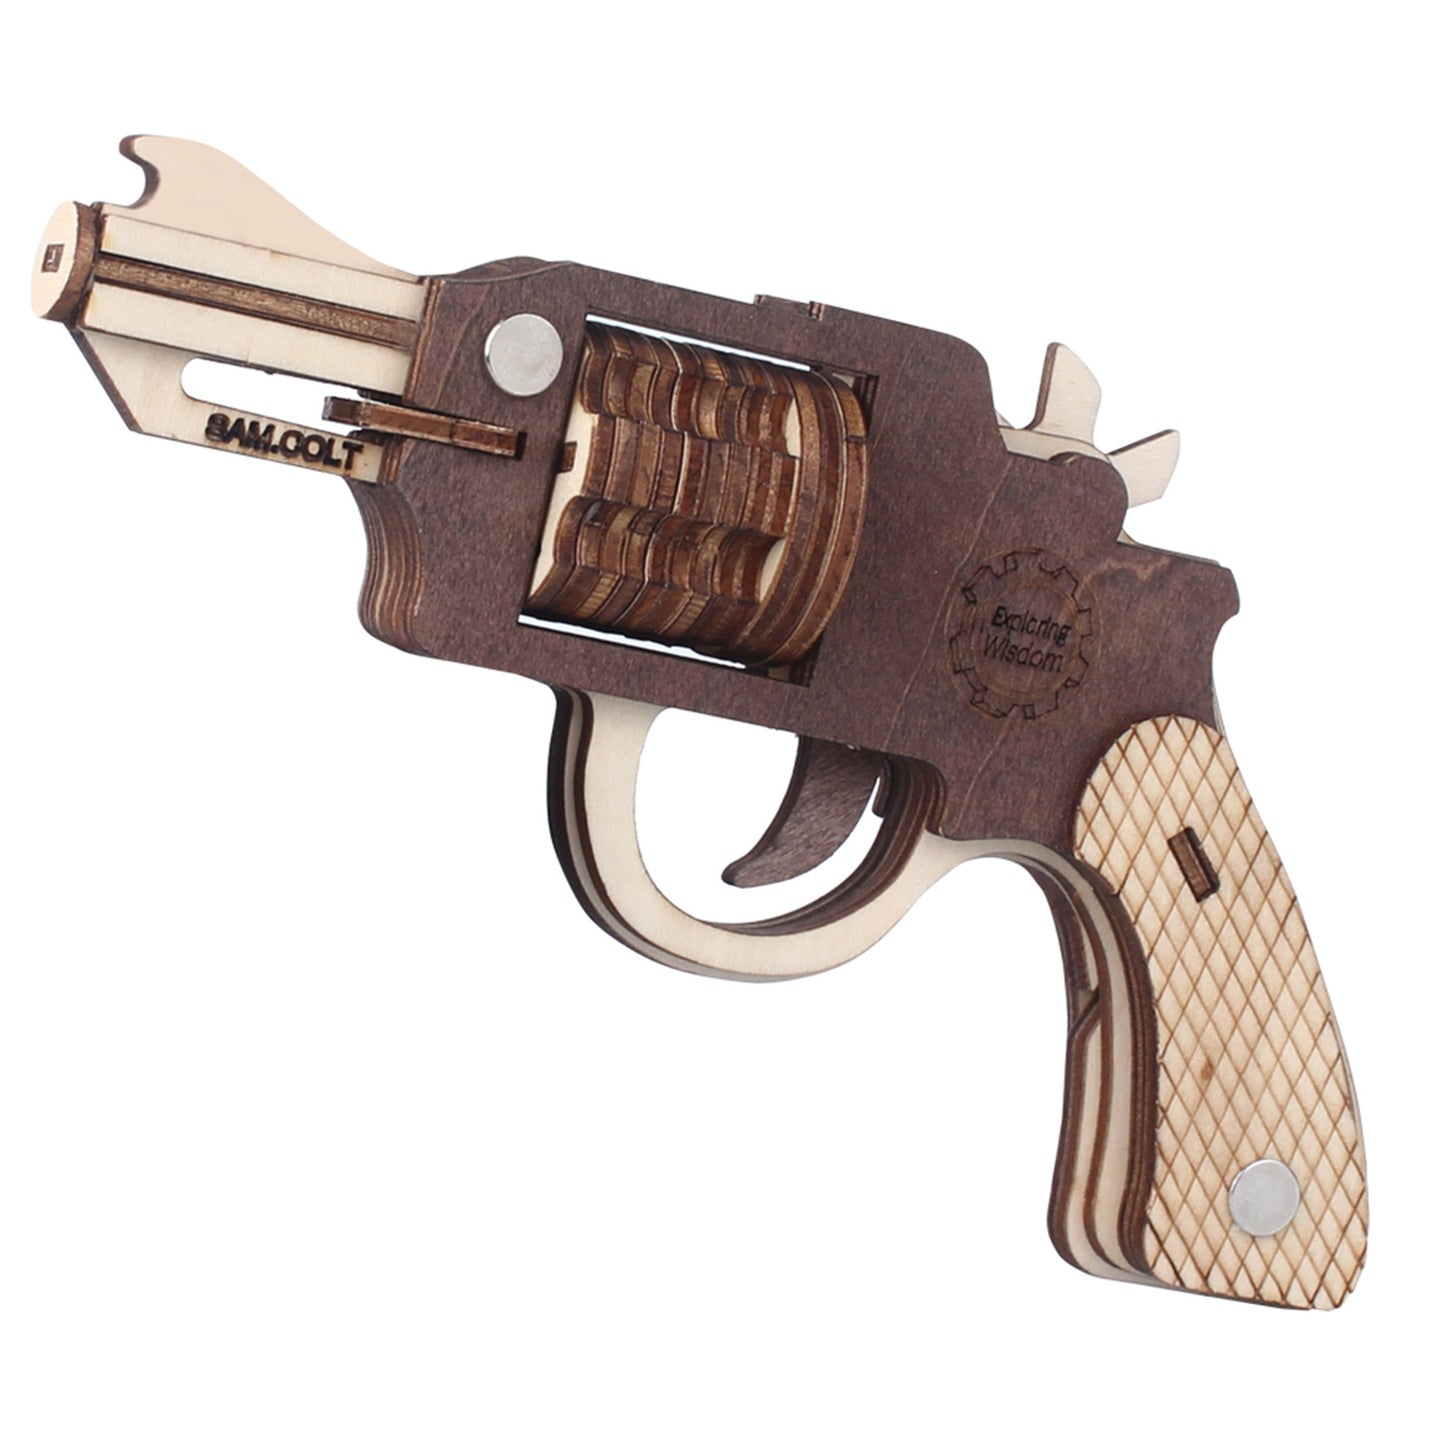 DIY 3D Colt Revolver Rubber Band Gun Wooden Puzzle Kit